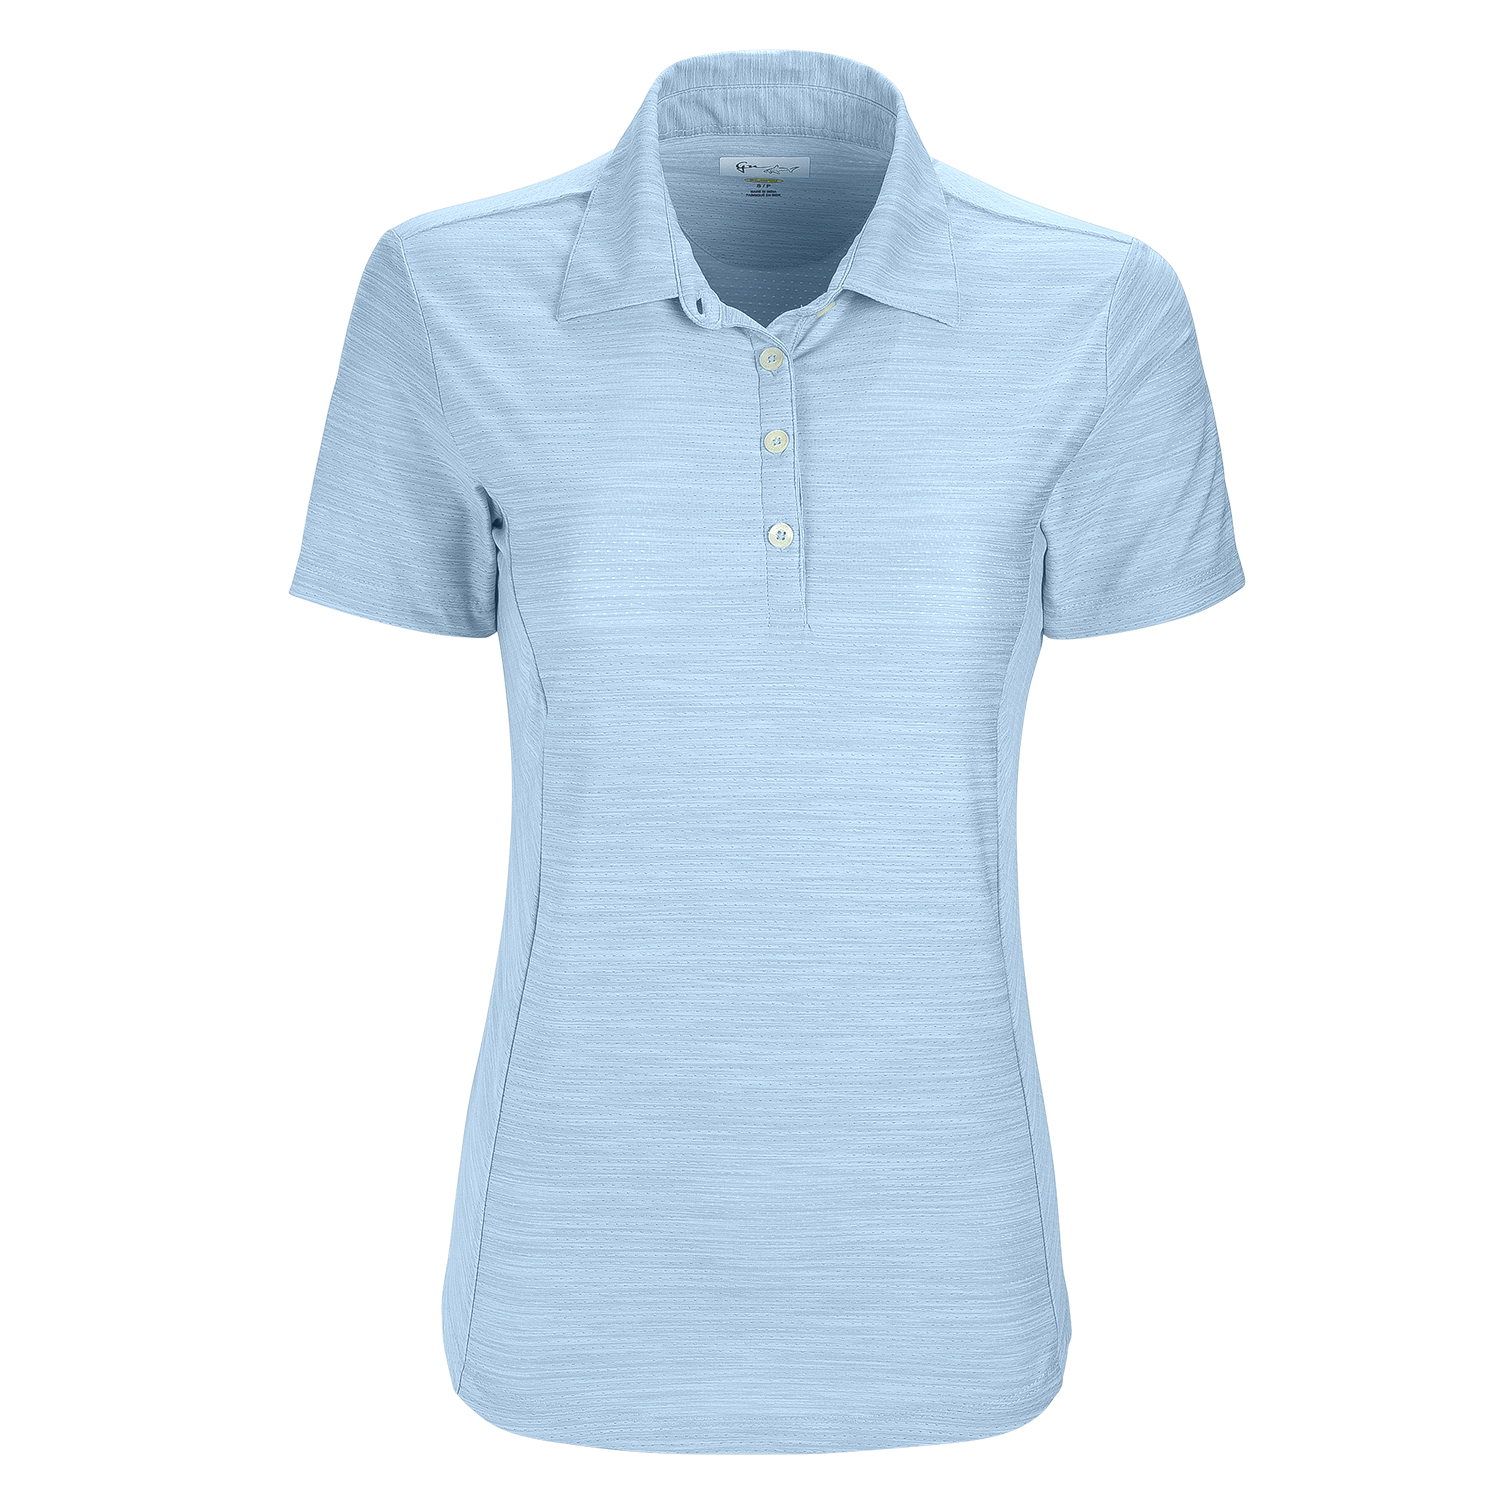 Polos | Women's Play Dry® Heathered Golf Shirt | Greg Norman